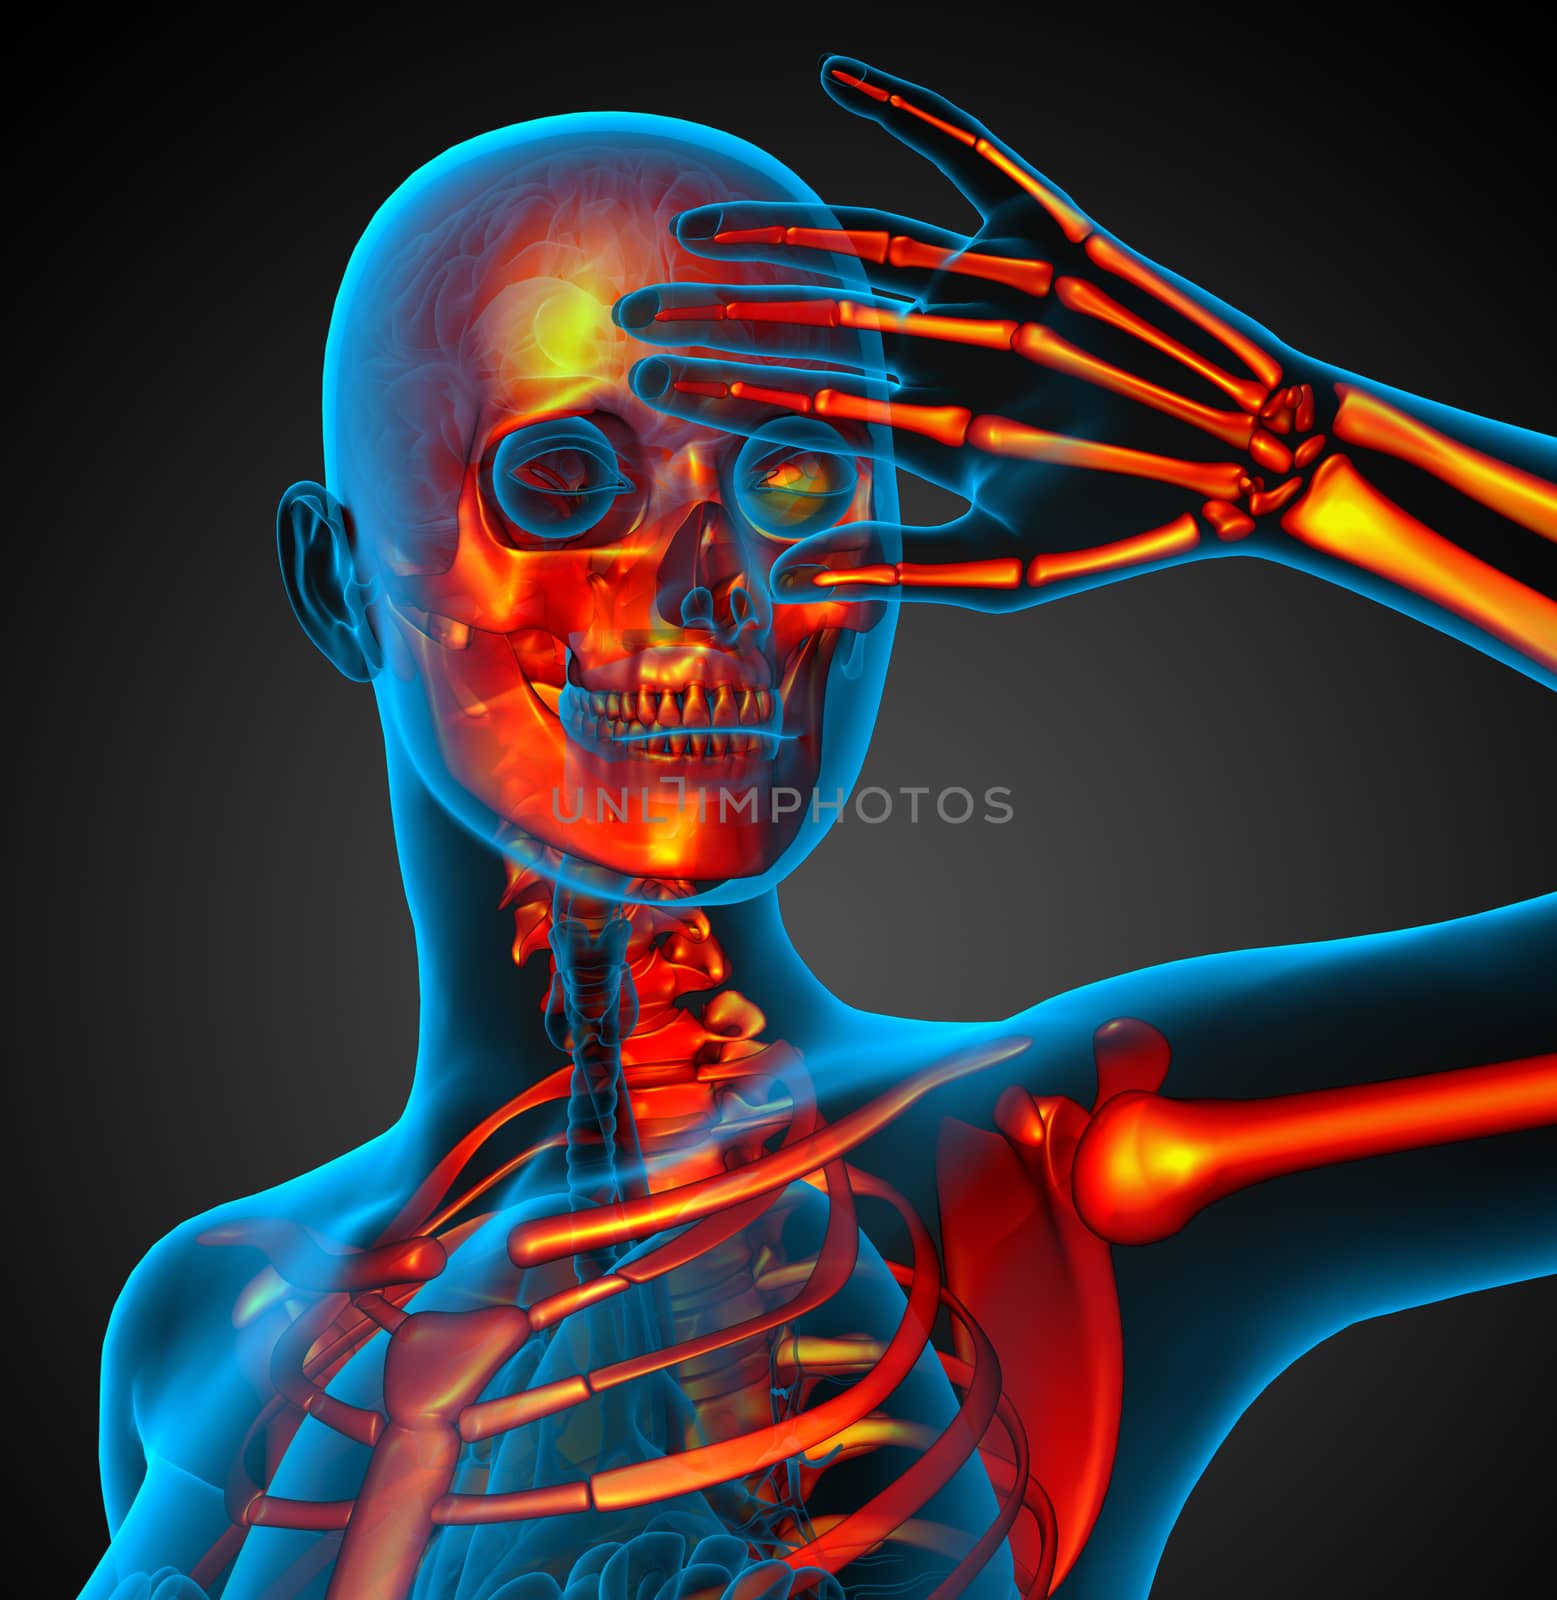 3D medical illustration of the human skeleton by maya2008